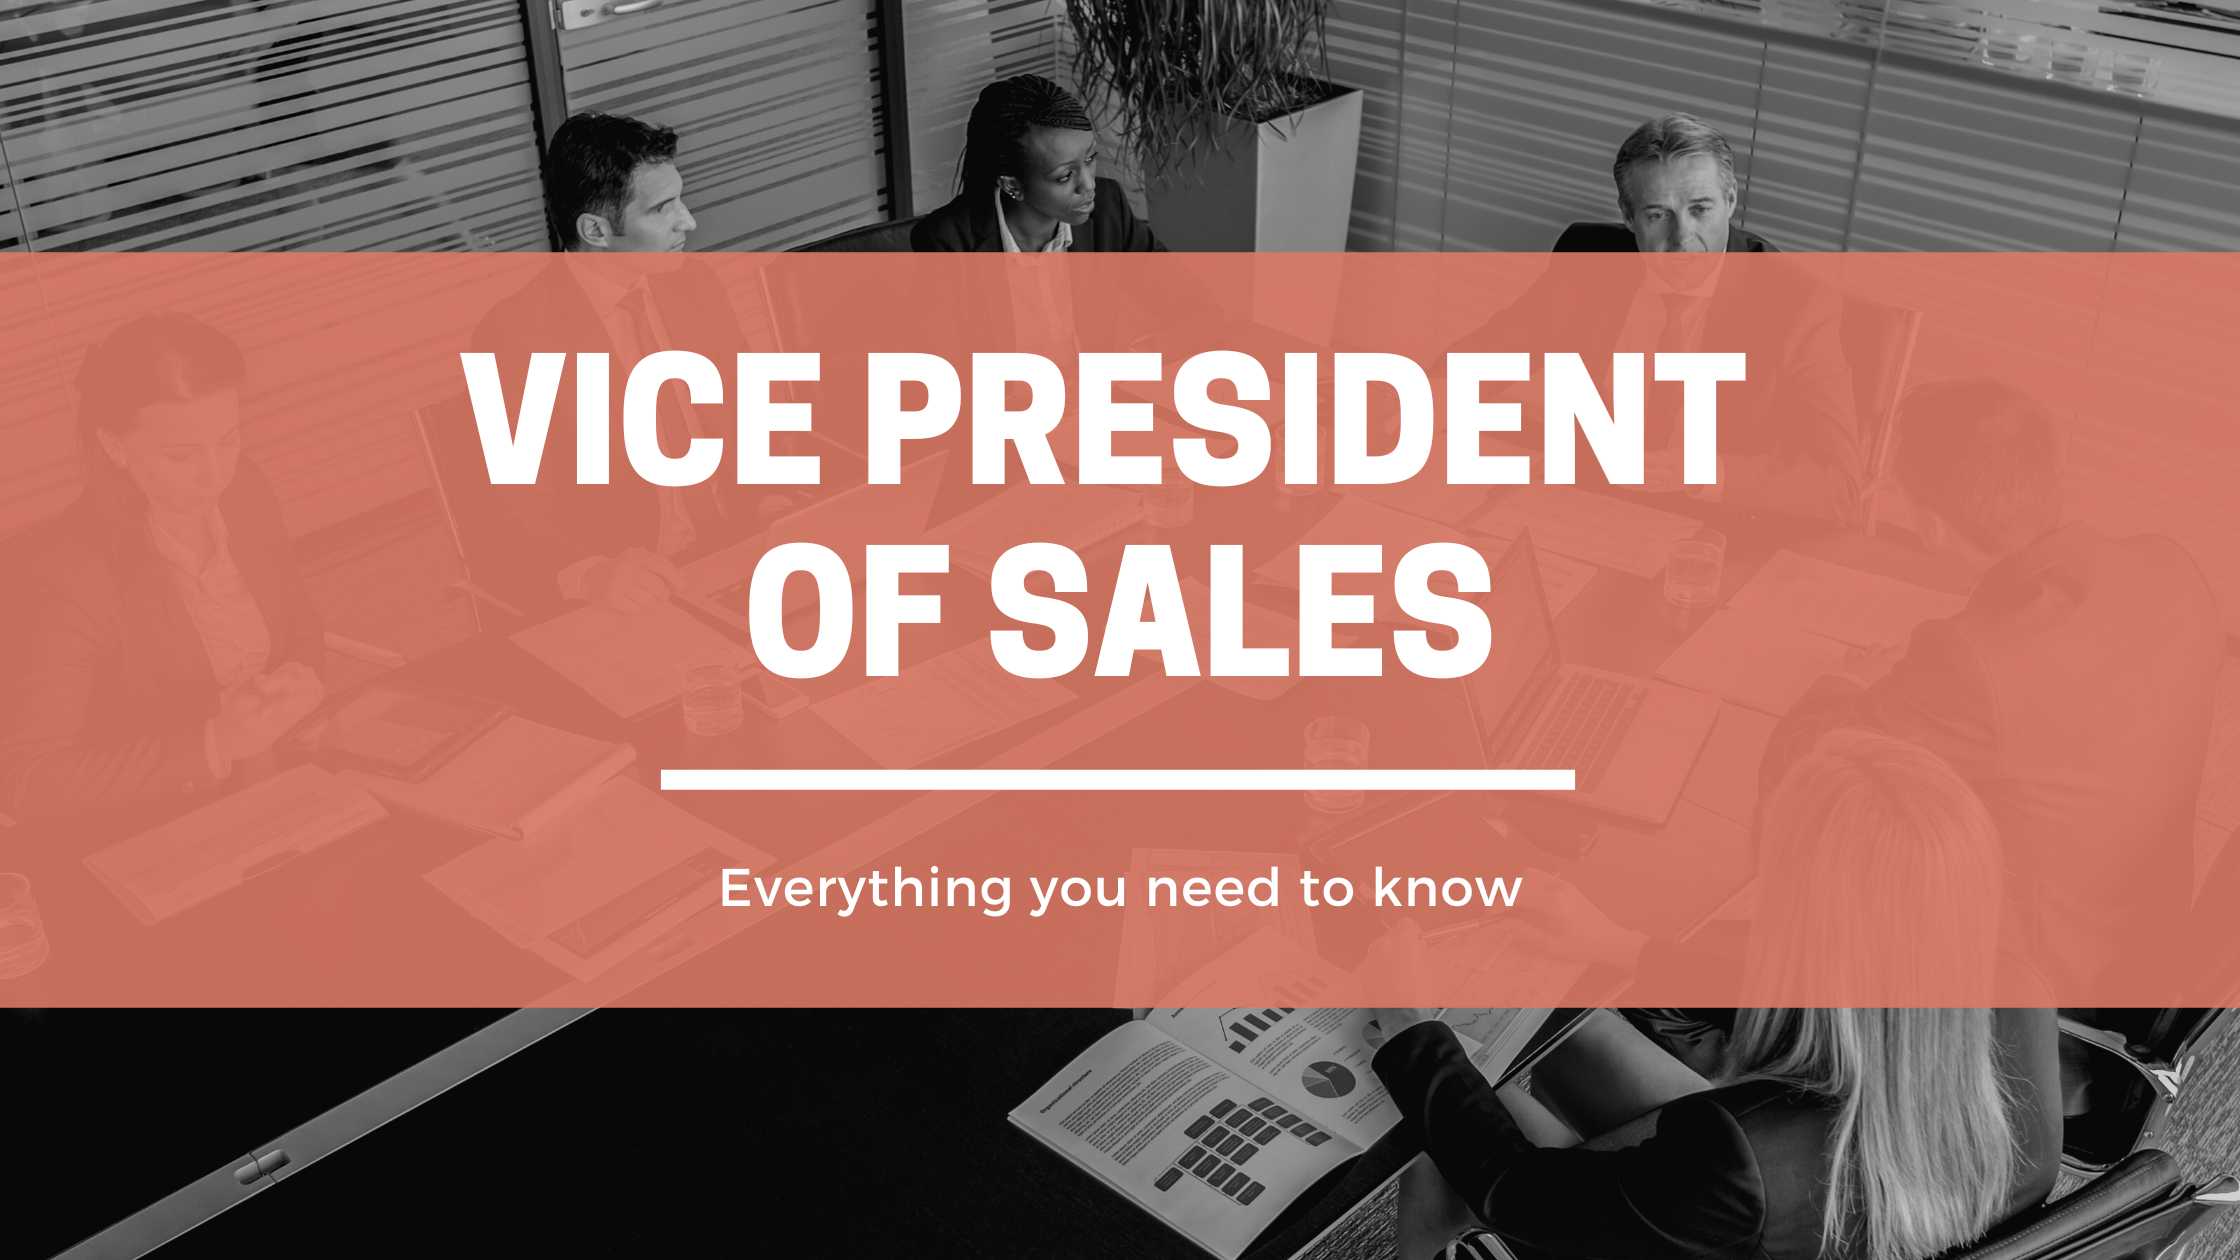 Vice President of Sales header image